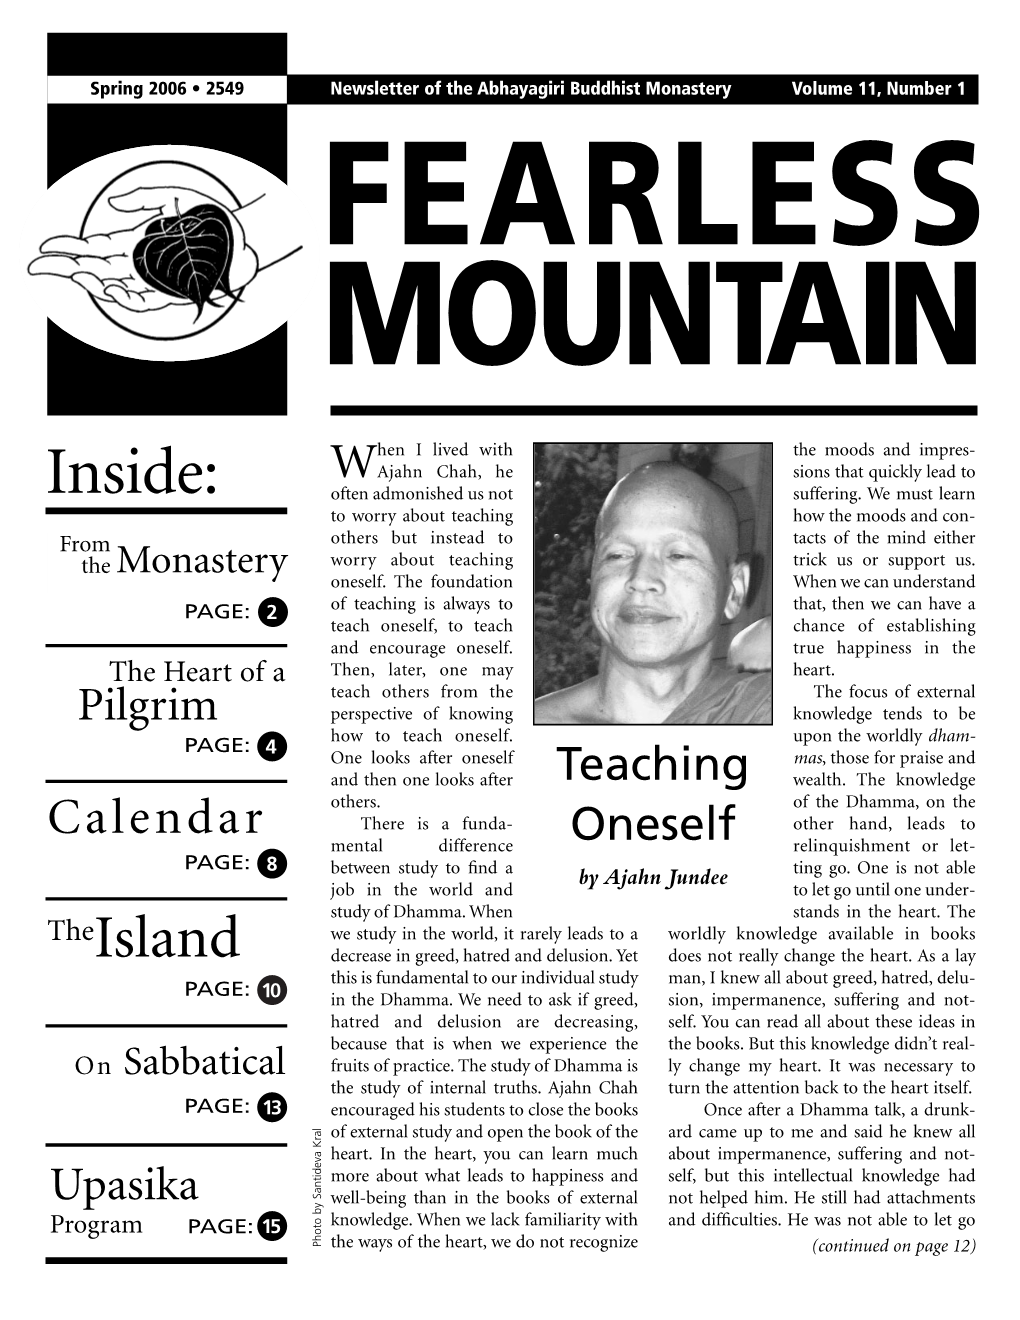 Fearless Mountain